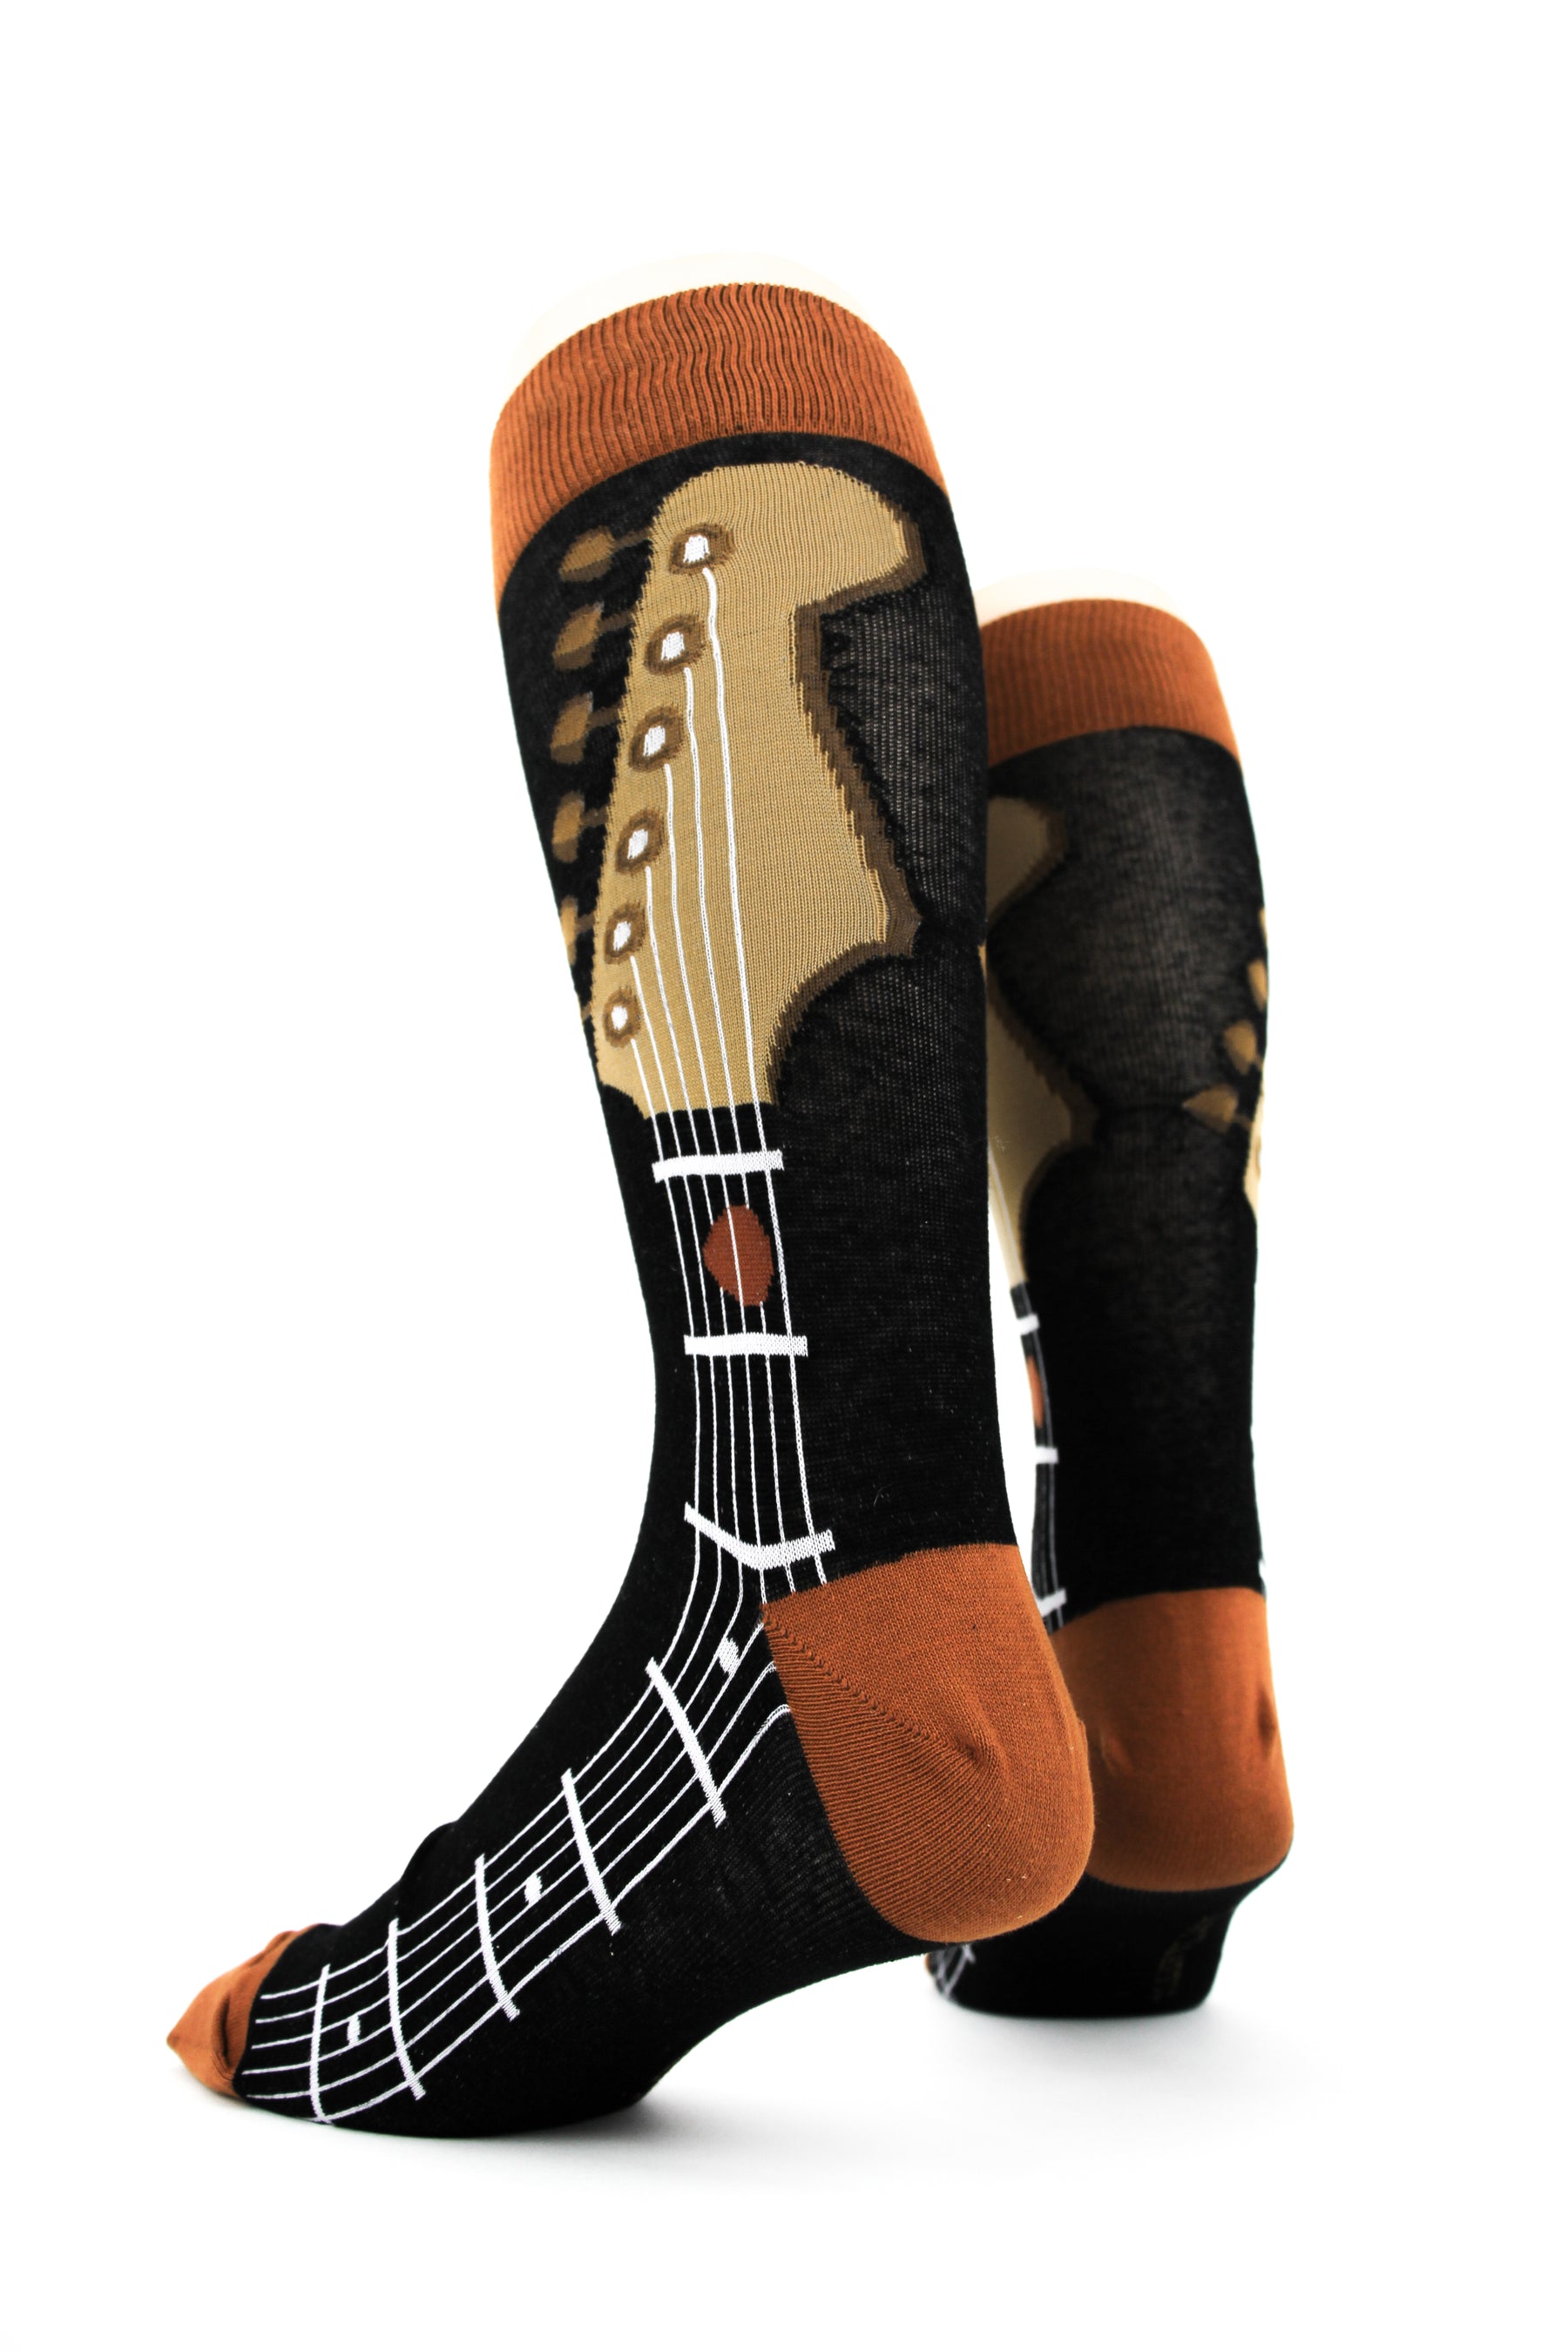 Socks: Guitar Neck design